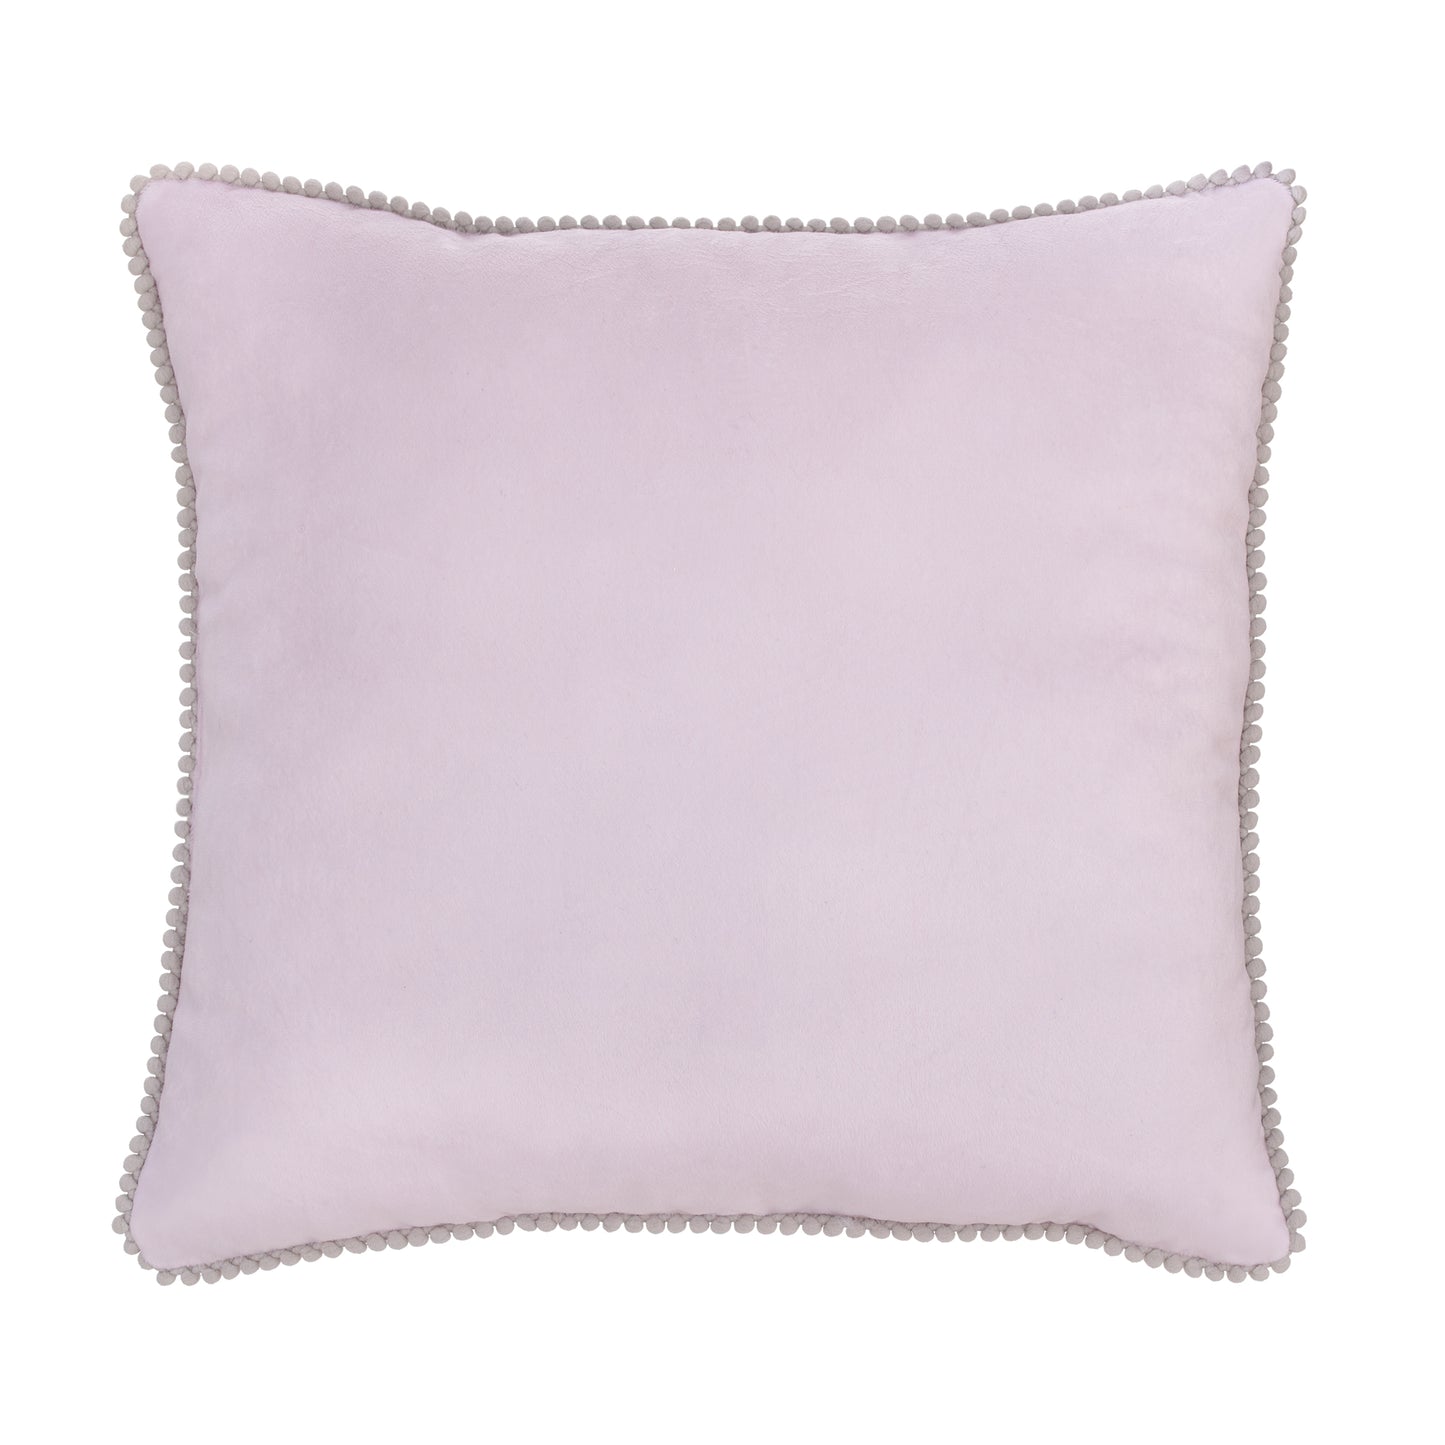 Disney Sweet Princess Pink and Light Blue Never Stop Dreaming Glass Slipper Decorative Pillow